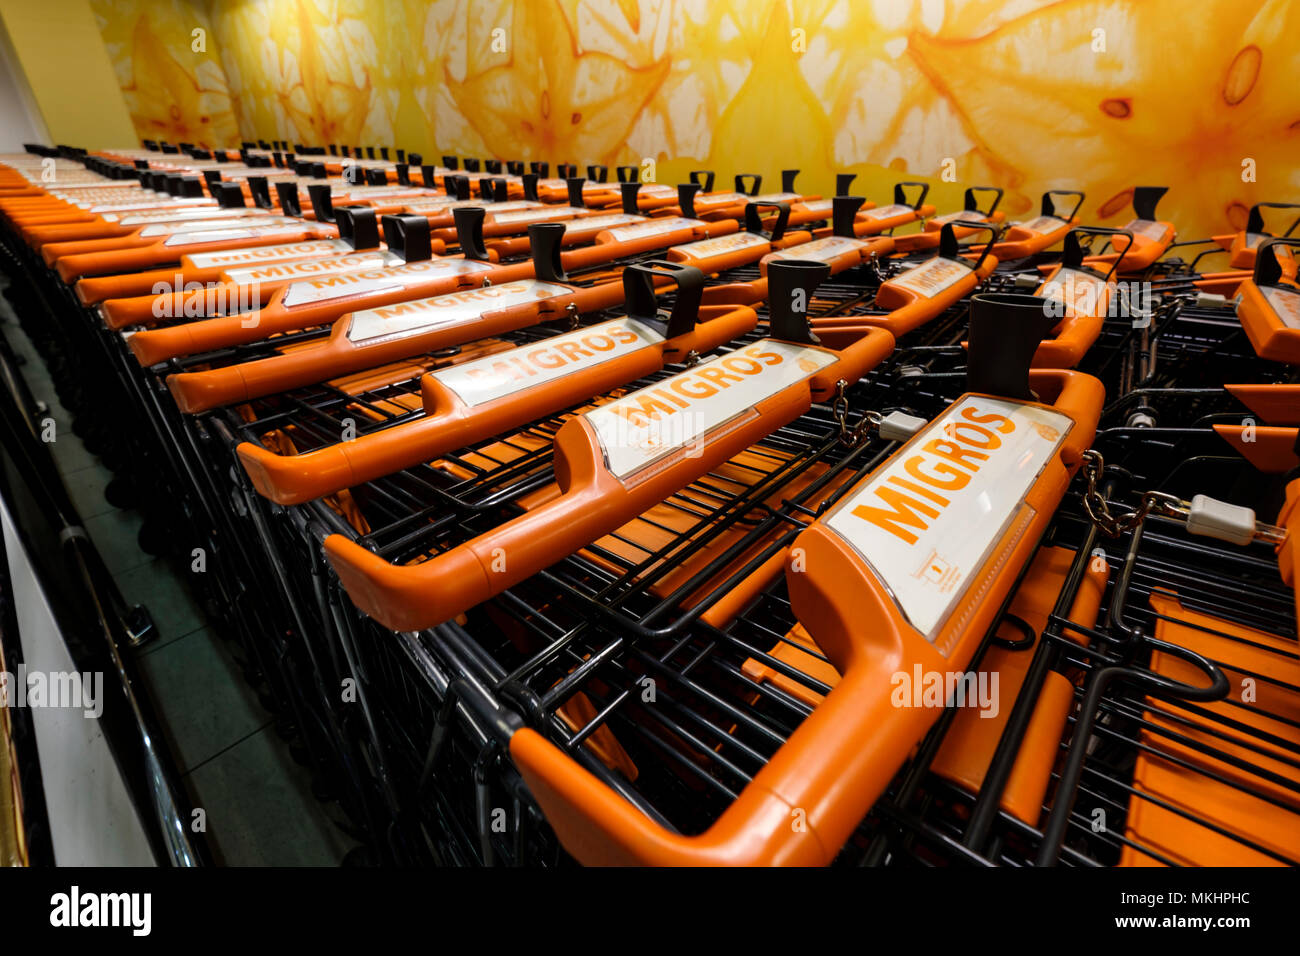 Migros supermarket trolley carts in Switzerland, Europe Stock Photo